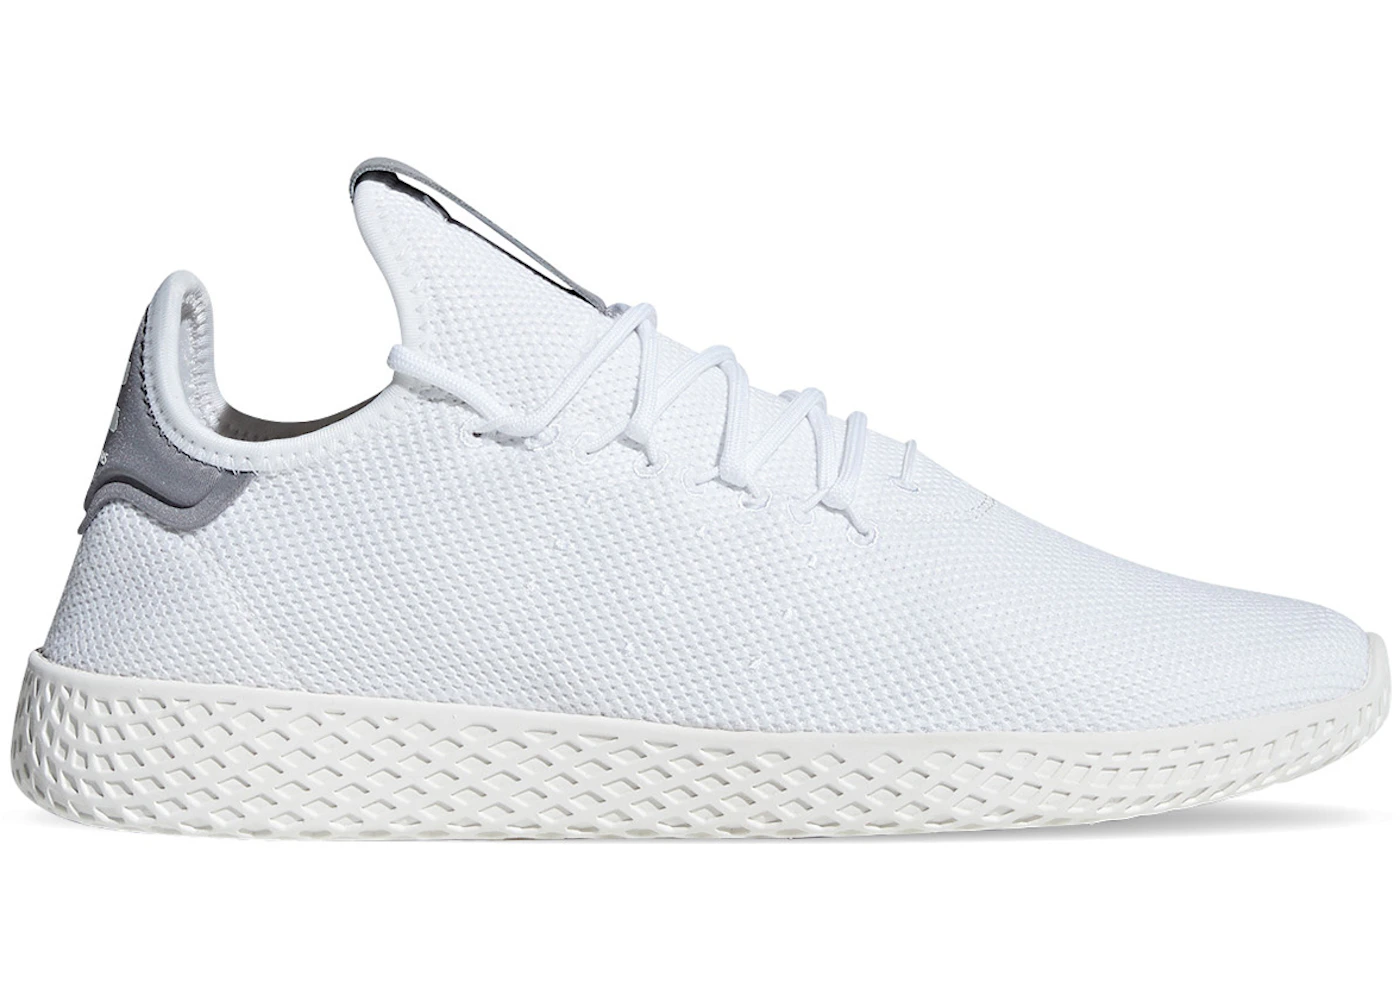 Adidas Tennis Hu Pharrell Williams Footwear White Core White